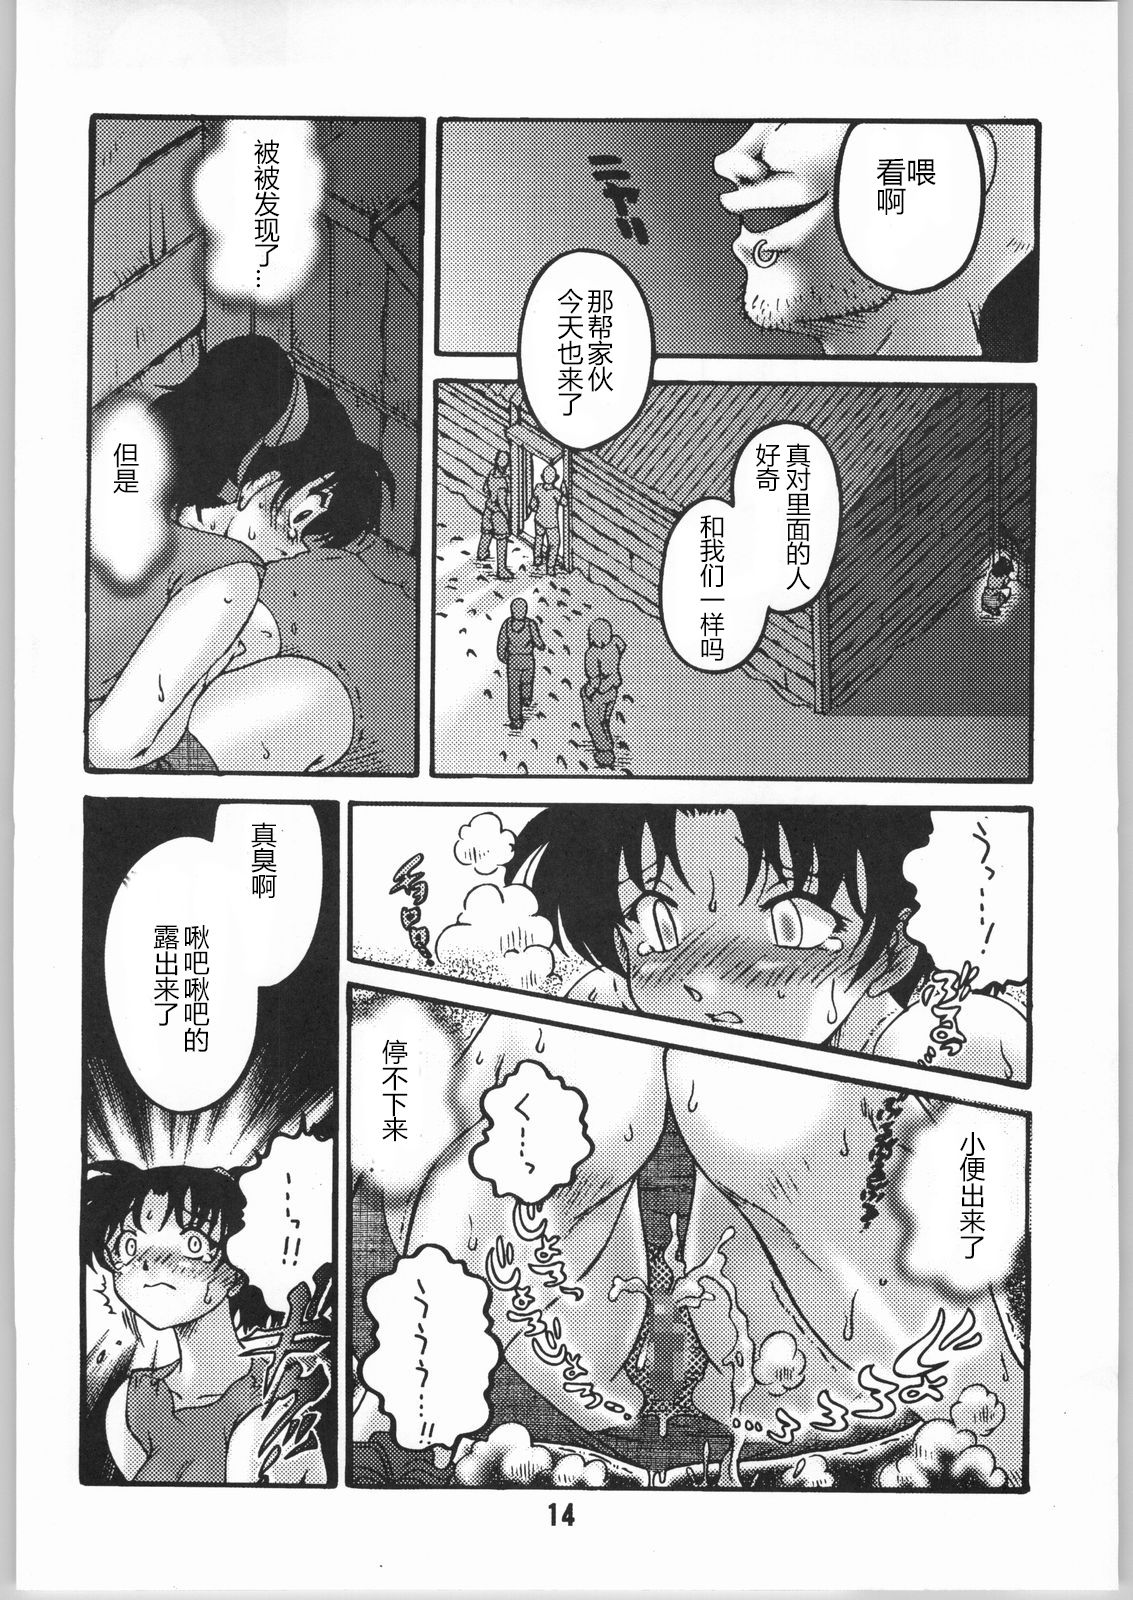 [Sunset Dreamer] Mishiranu Yuujin (Meitantei Conan (Detective Conan) / Case Closed)) CHINESE [Sunset Dreamer] 見知らぬ友人 (名探偵 コナン) CHINESE